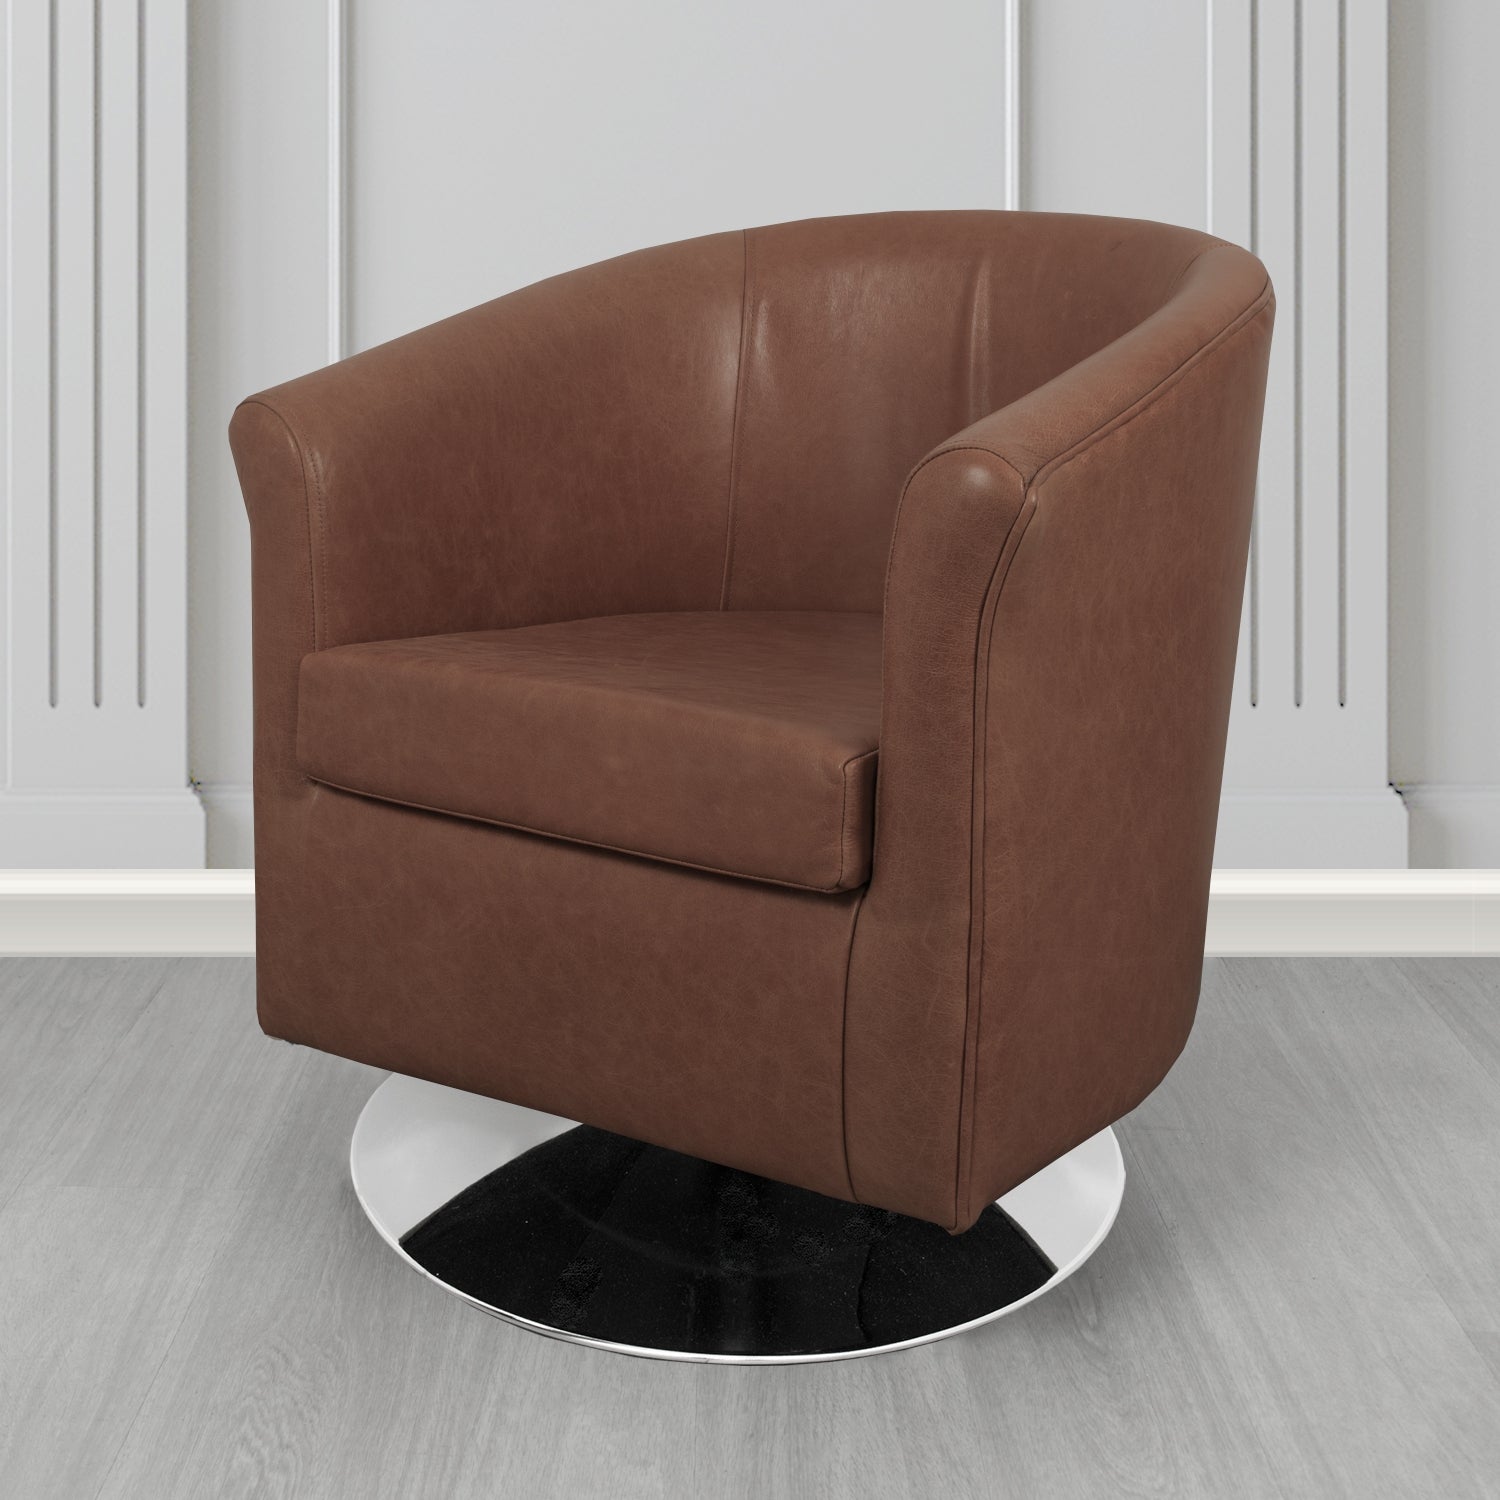 Tuscany Swivel Tub Chair in Crib 5 Old English Dark Brown Genuine Leather - The Tub Chair Shop